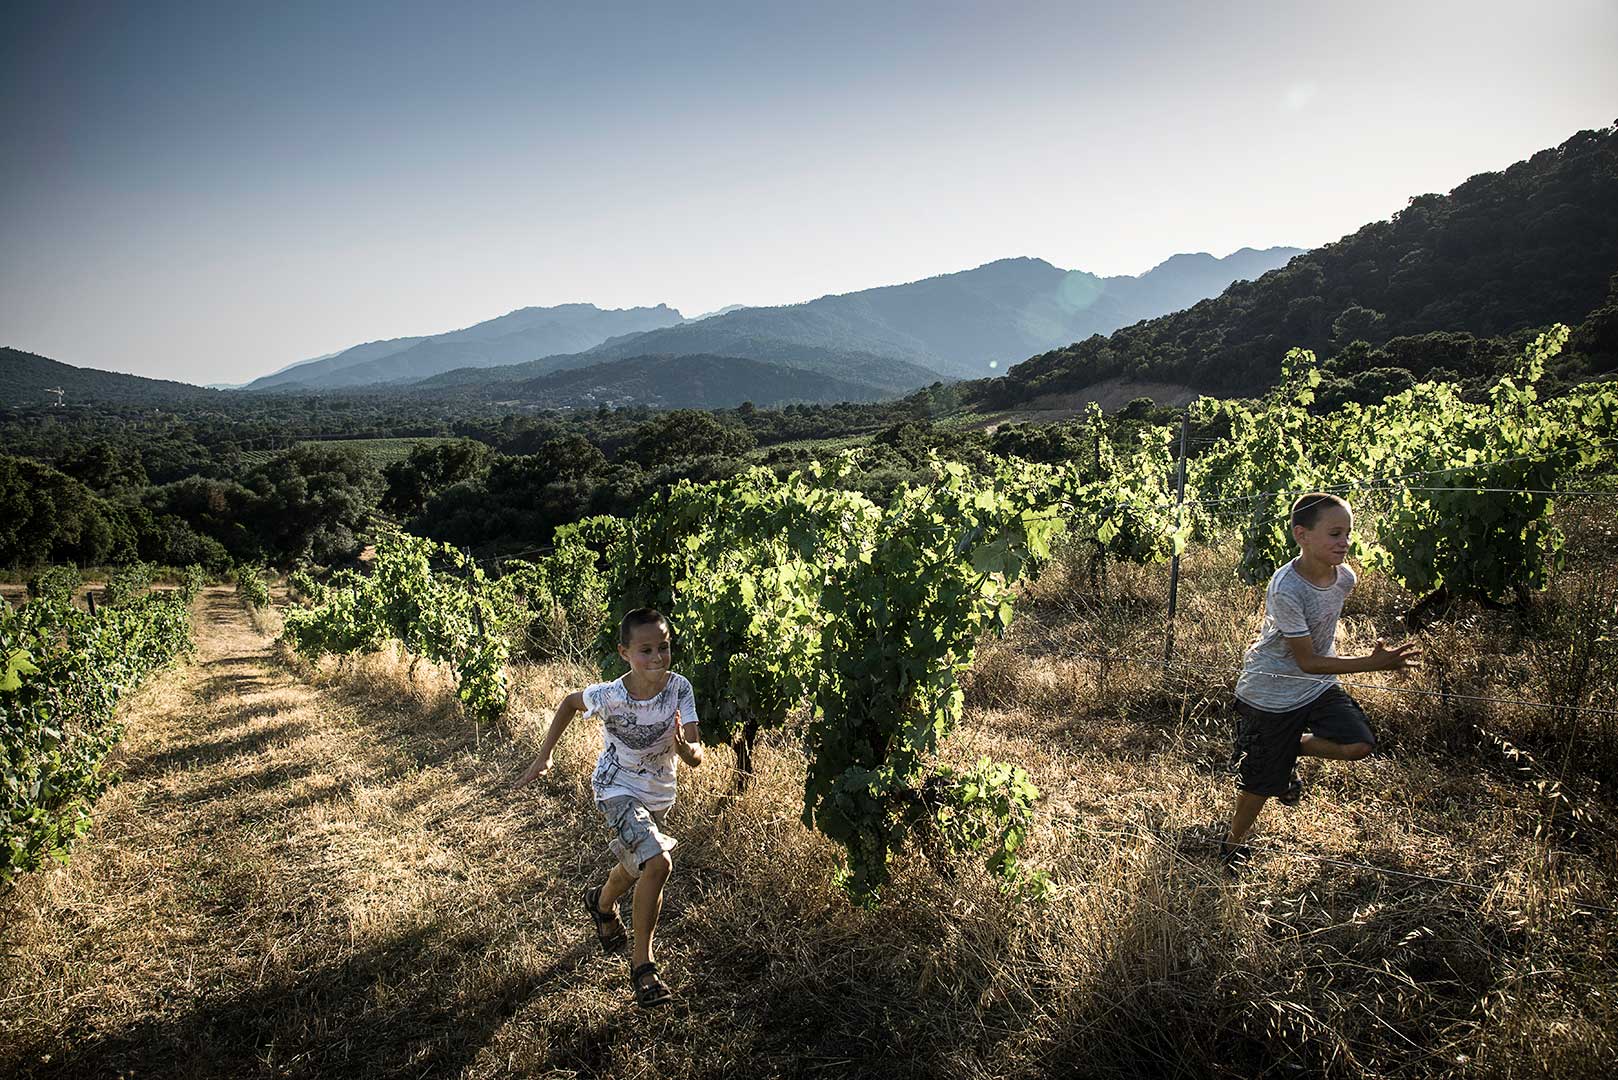 enfants qui courent dans les vignes, Corse, photo Emmanuel Perrin